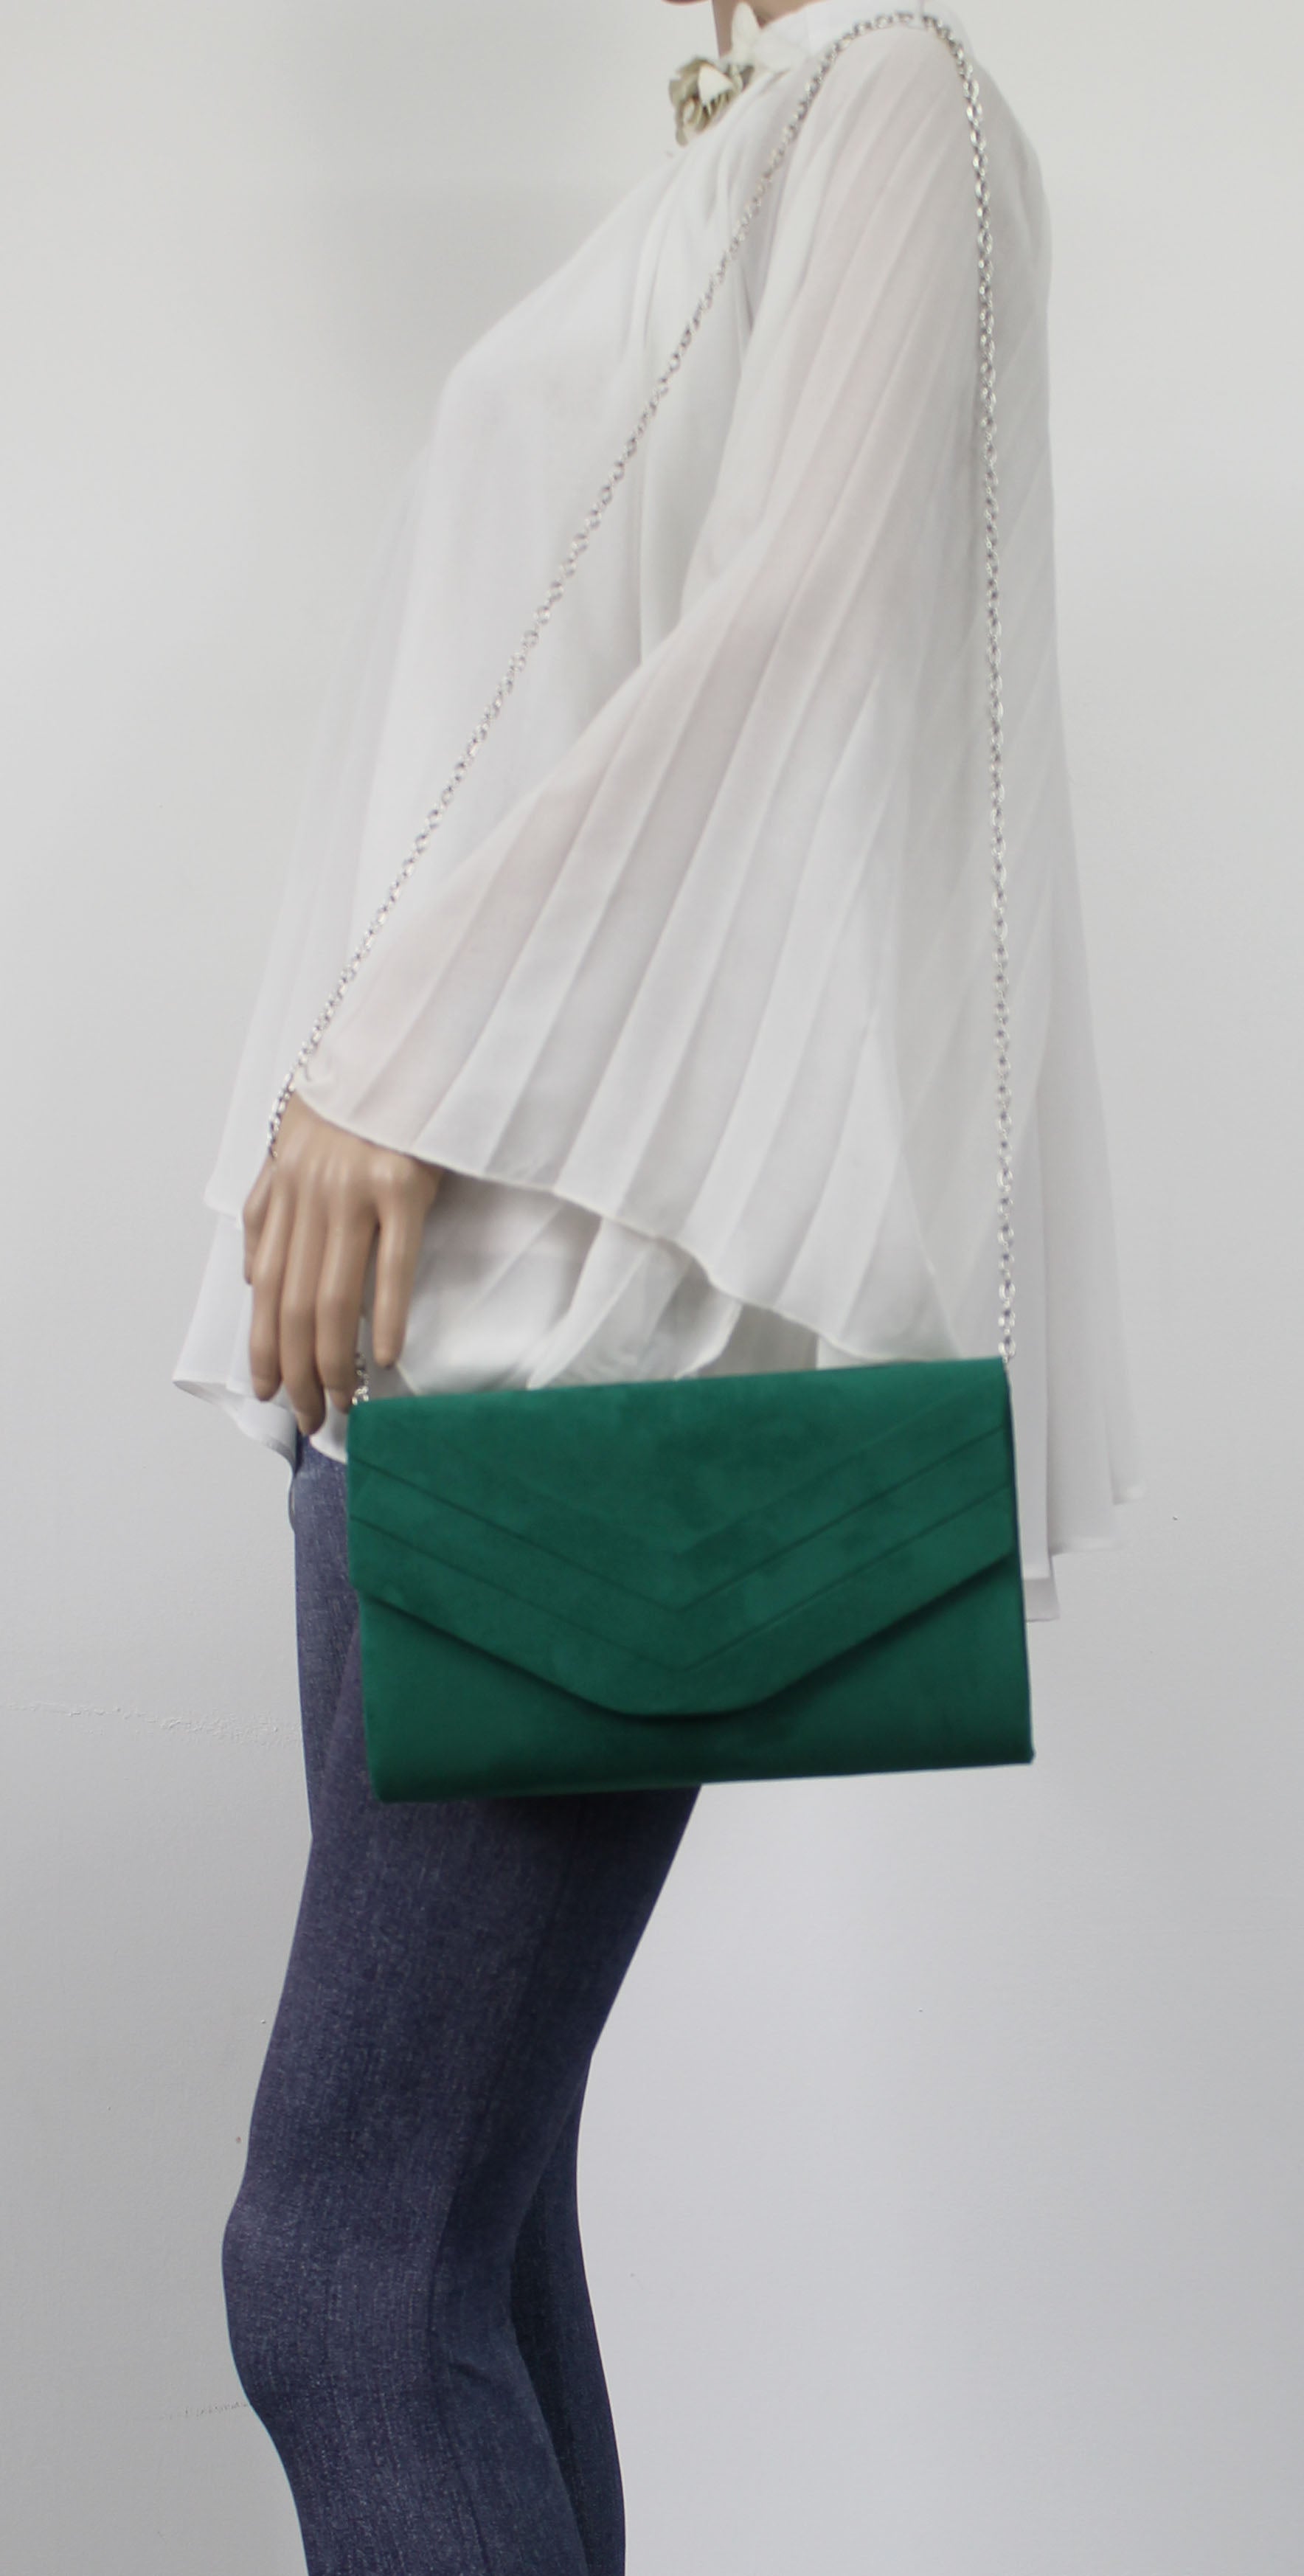 SWANKYSWANS Samantha V Detail Clutch Bag Dark Green Cute Cheap Clutch Bag For Weddings School and Work